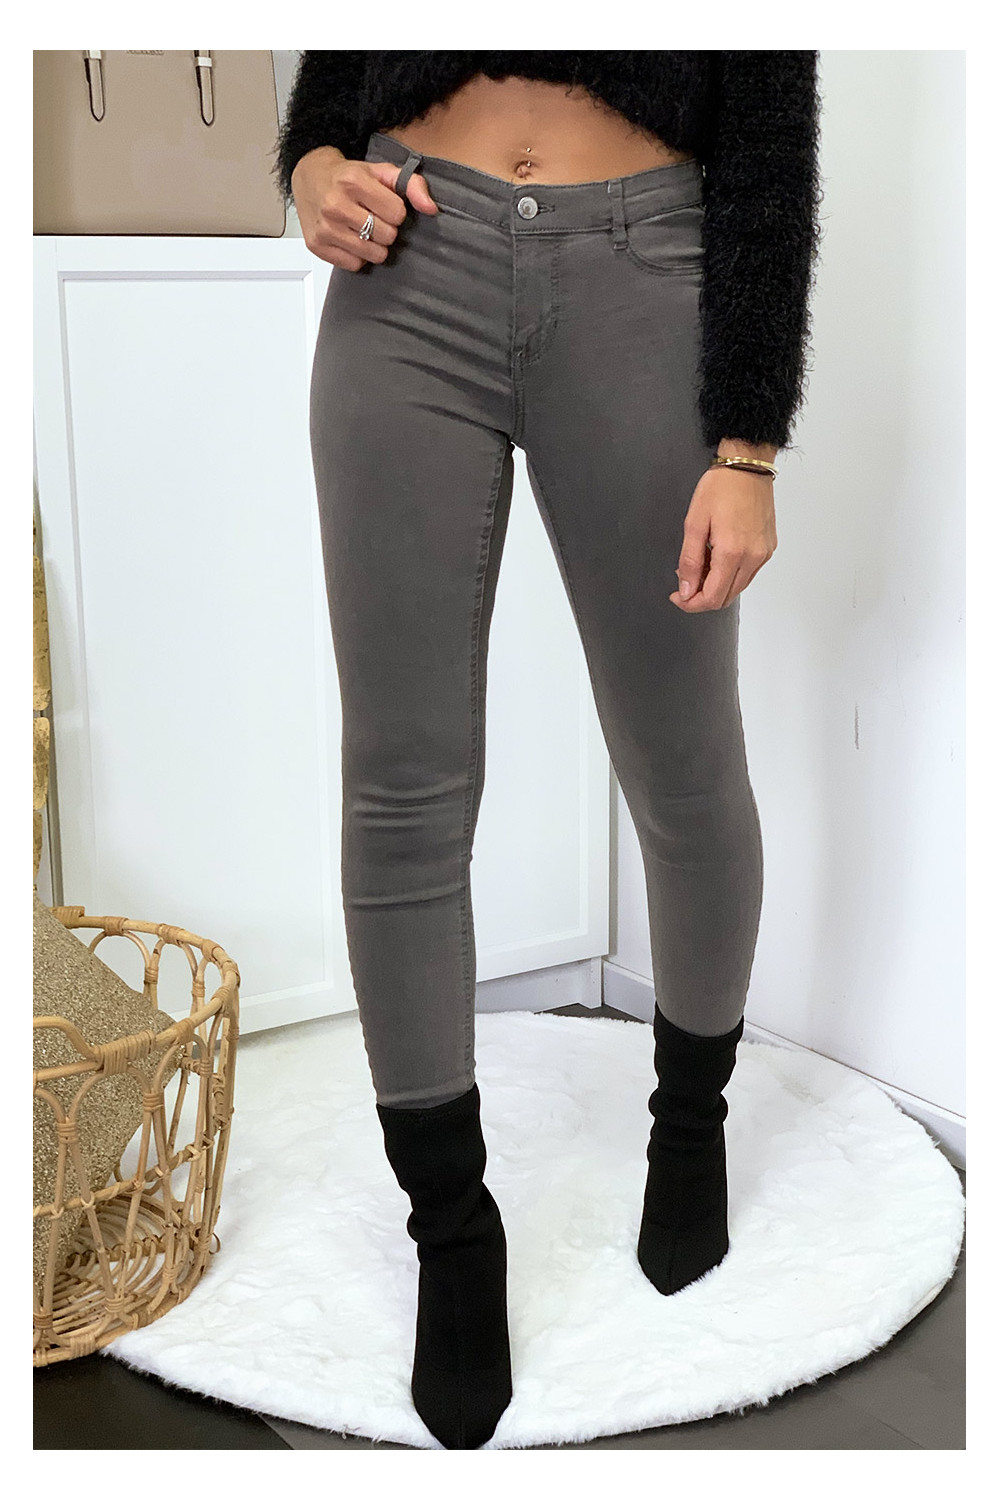 residentie dilemma Sortie Gray slim jeans with back pockets